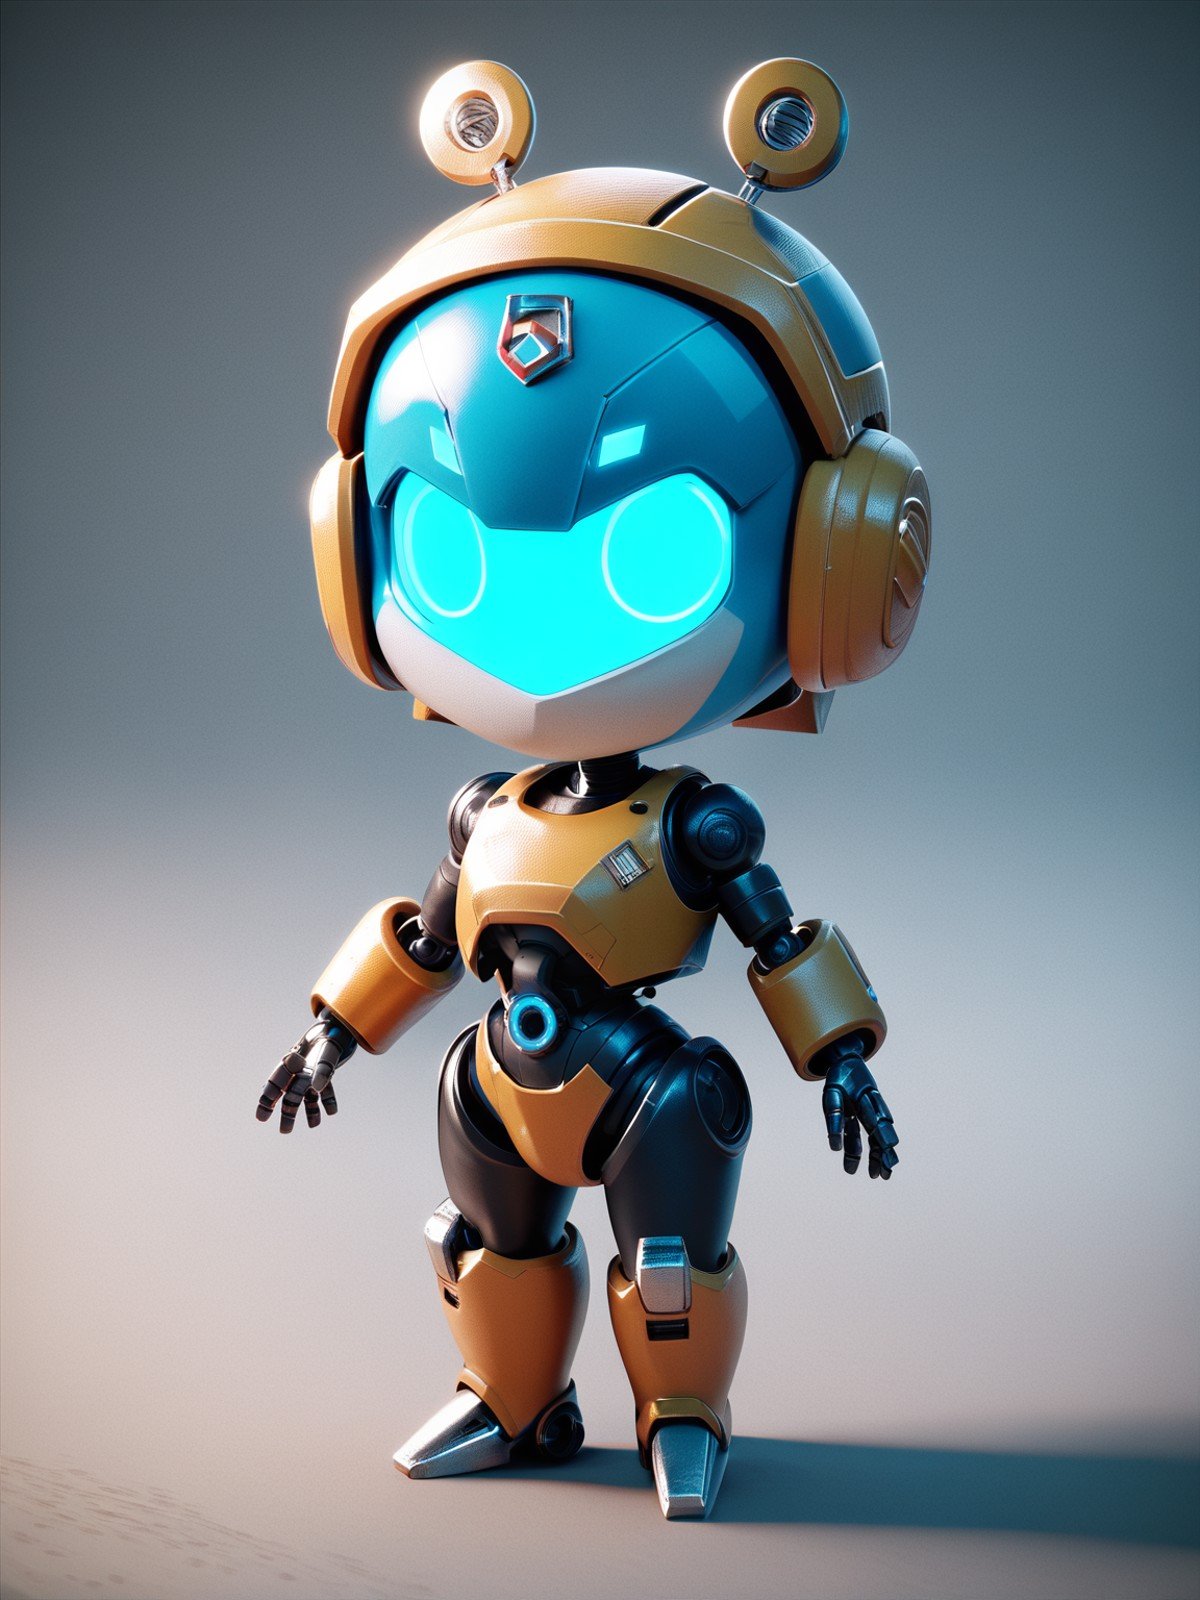 score_8_up, score_7_up, 3d render of robot, chibi, full body, helmet, simple background